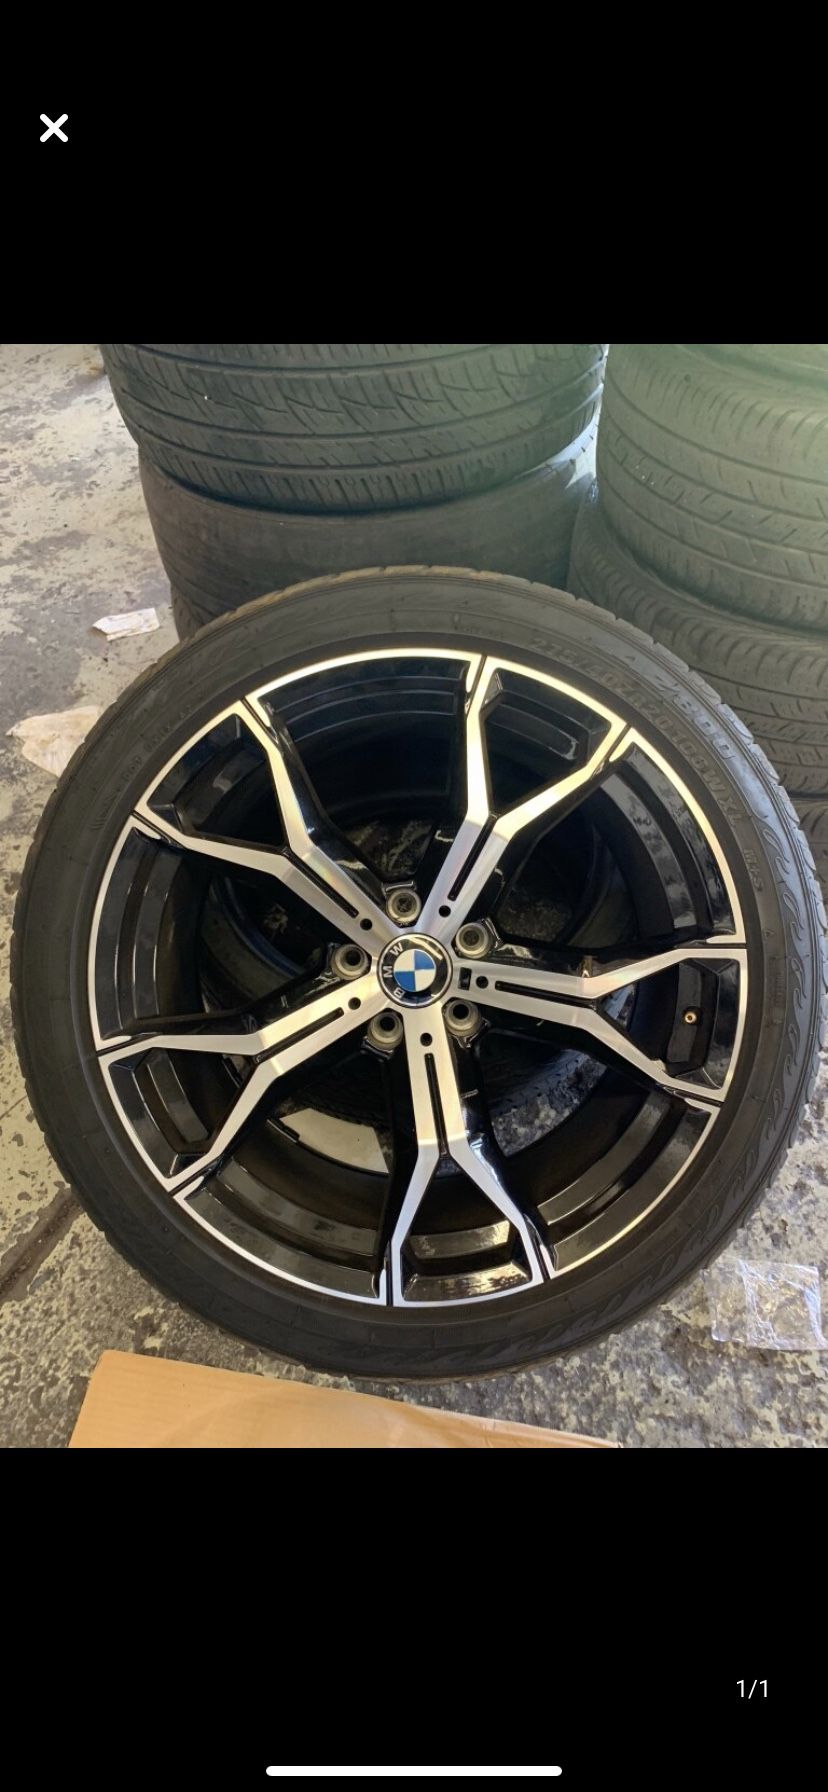 BMW X5 x6 x5m style 20” rims tires set